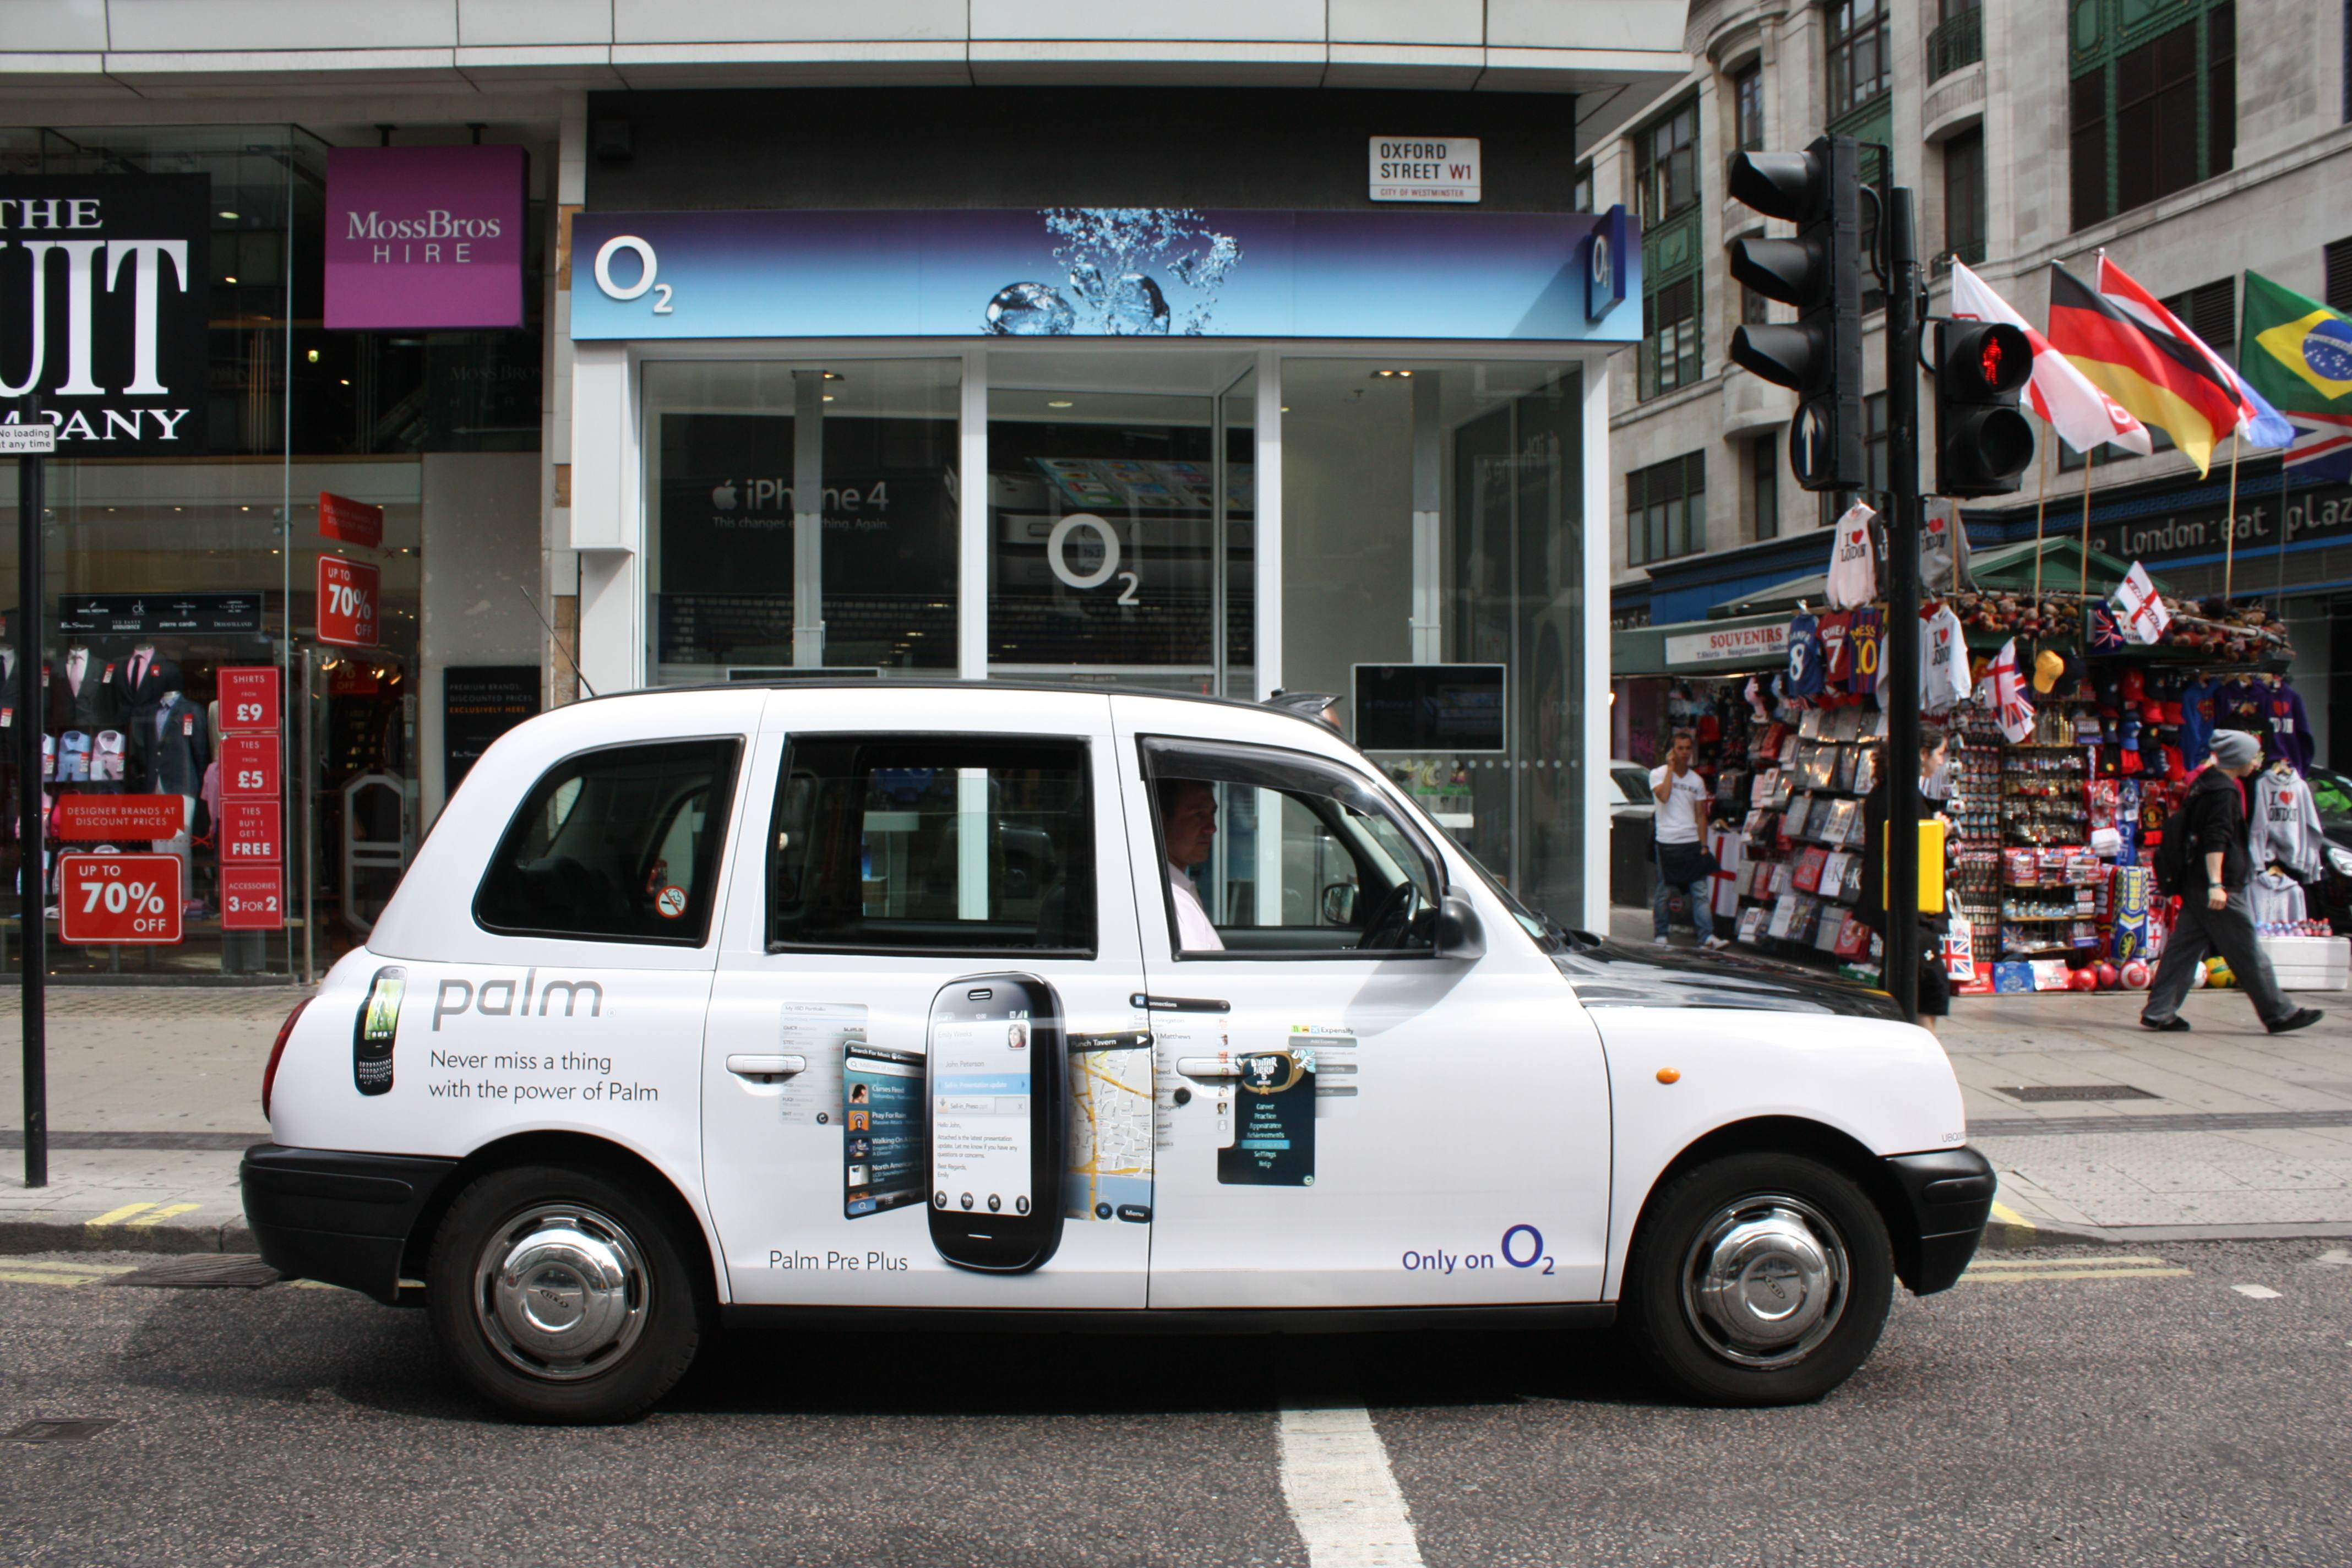 2010 Ubiquitous taxi advertising campaign for Palm - Palm Pre Plus